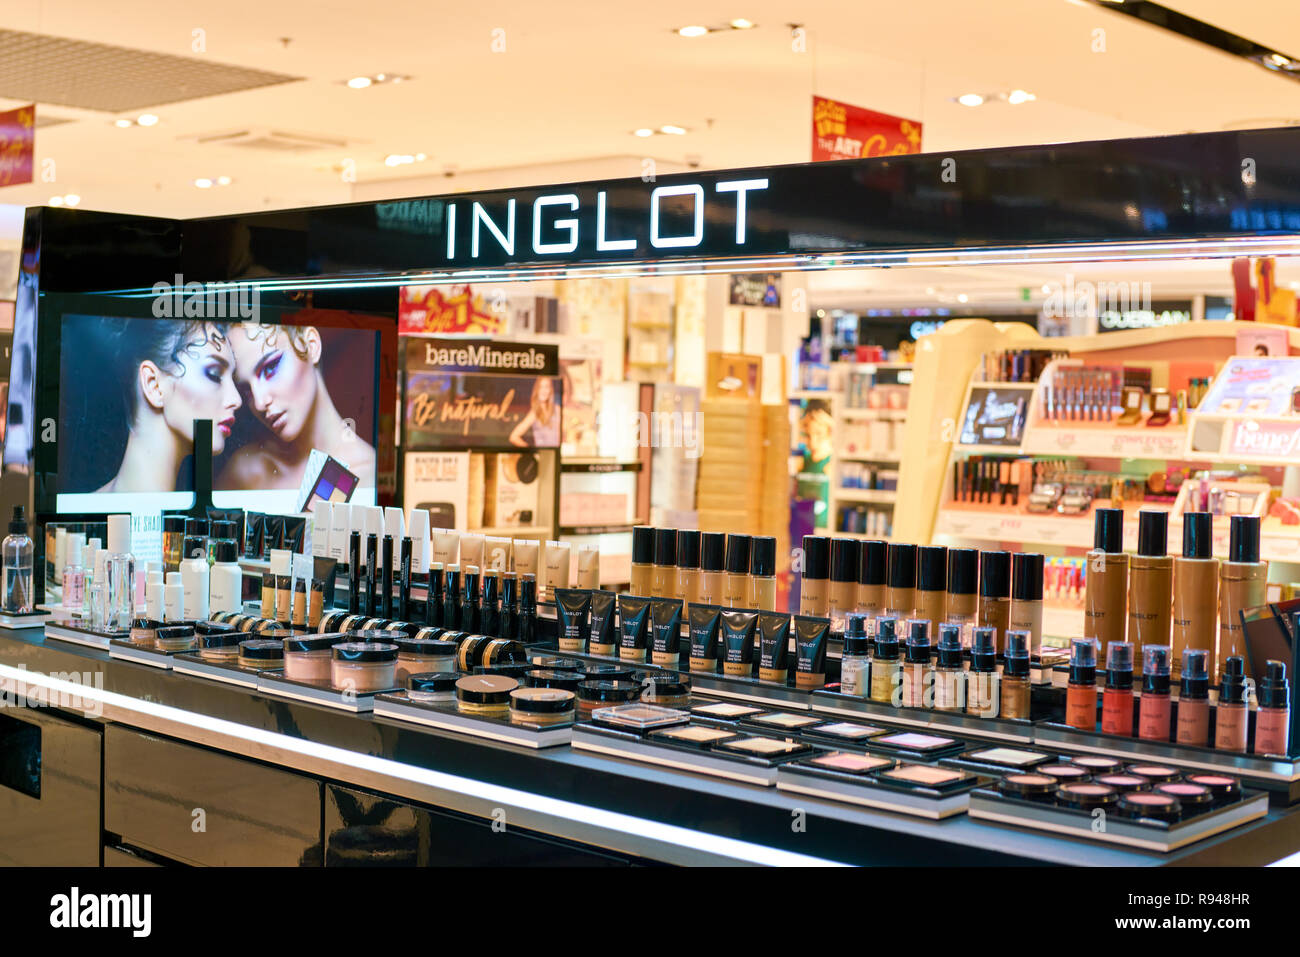 Inglot makeup hi-res stock photography and images - Alamy